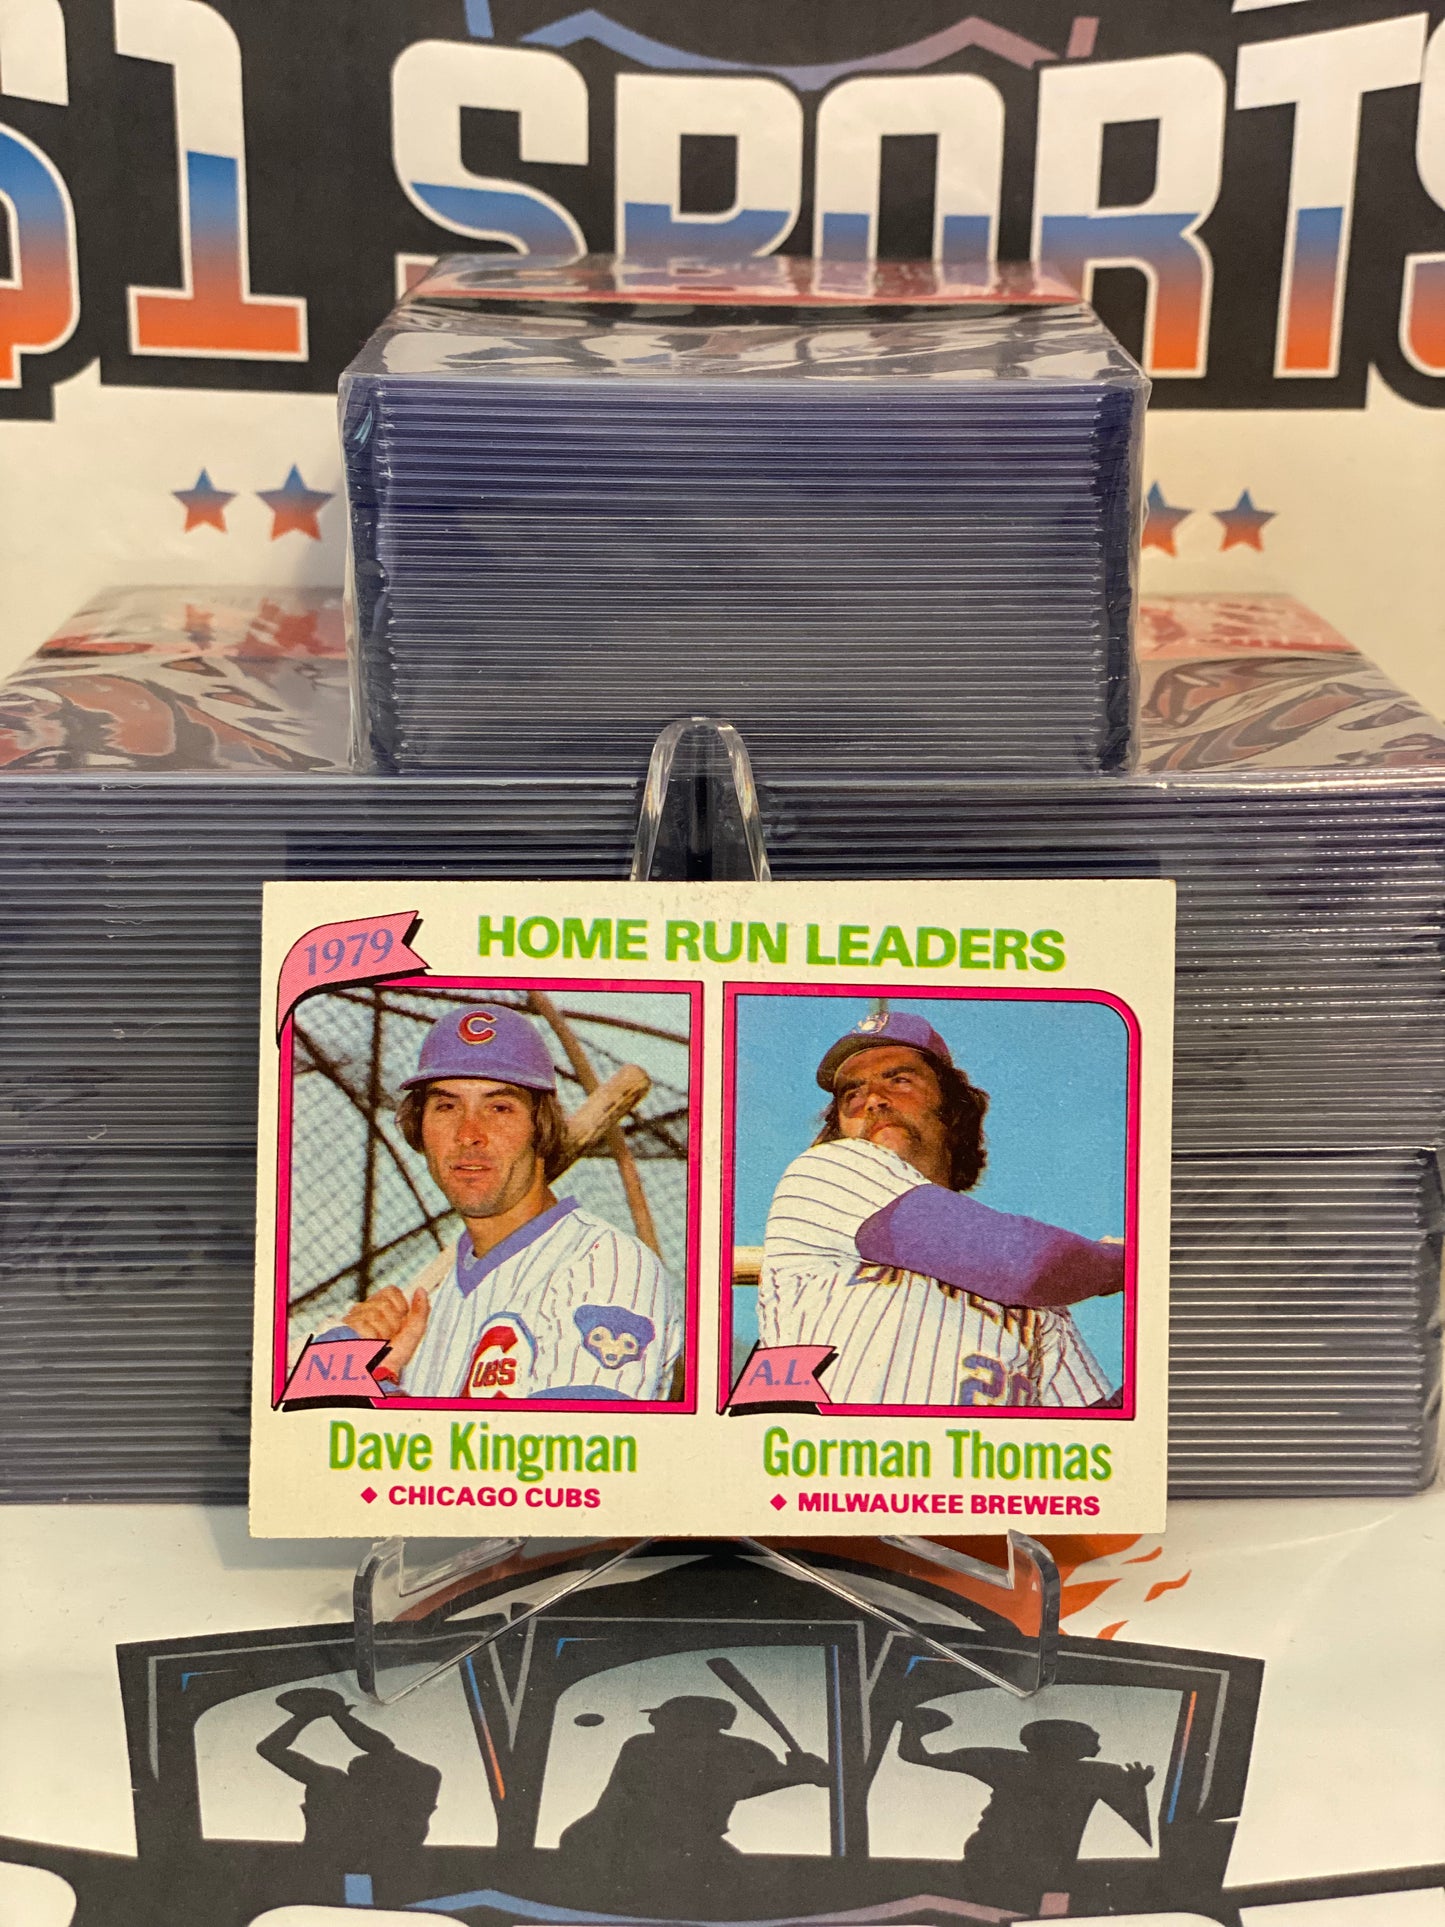 1980 Topps (1979 Home Run Leaders) Dave Kingman & Gorman Thomas #202